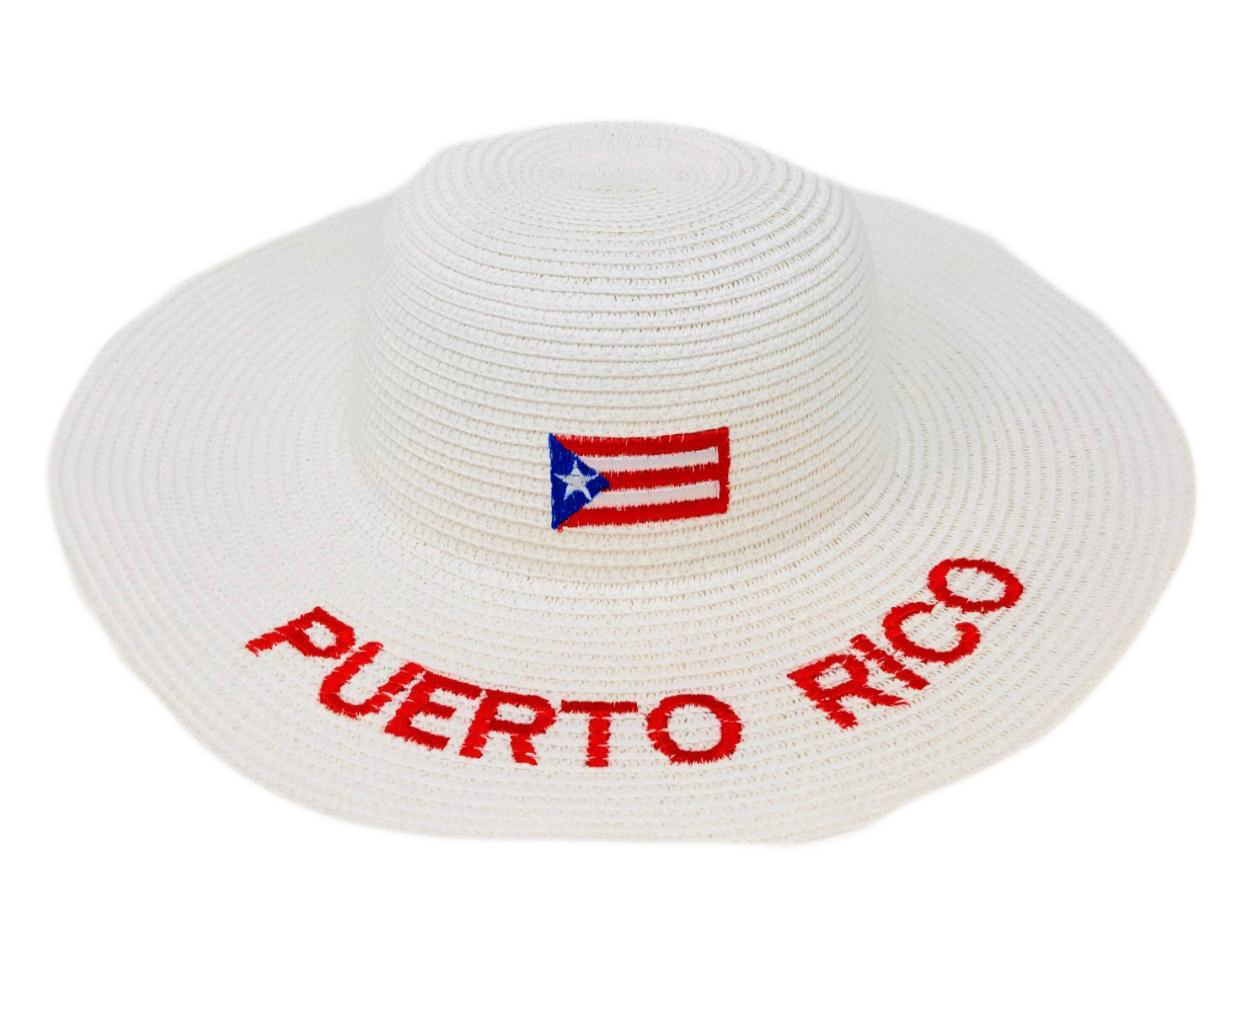 Puerto Rico Gorro<br/>Quantity Available:100 pcs 